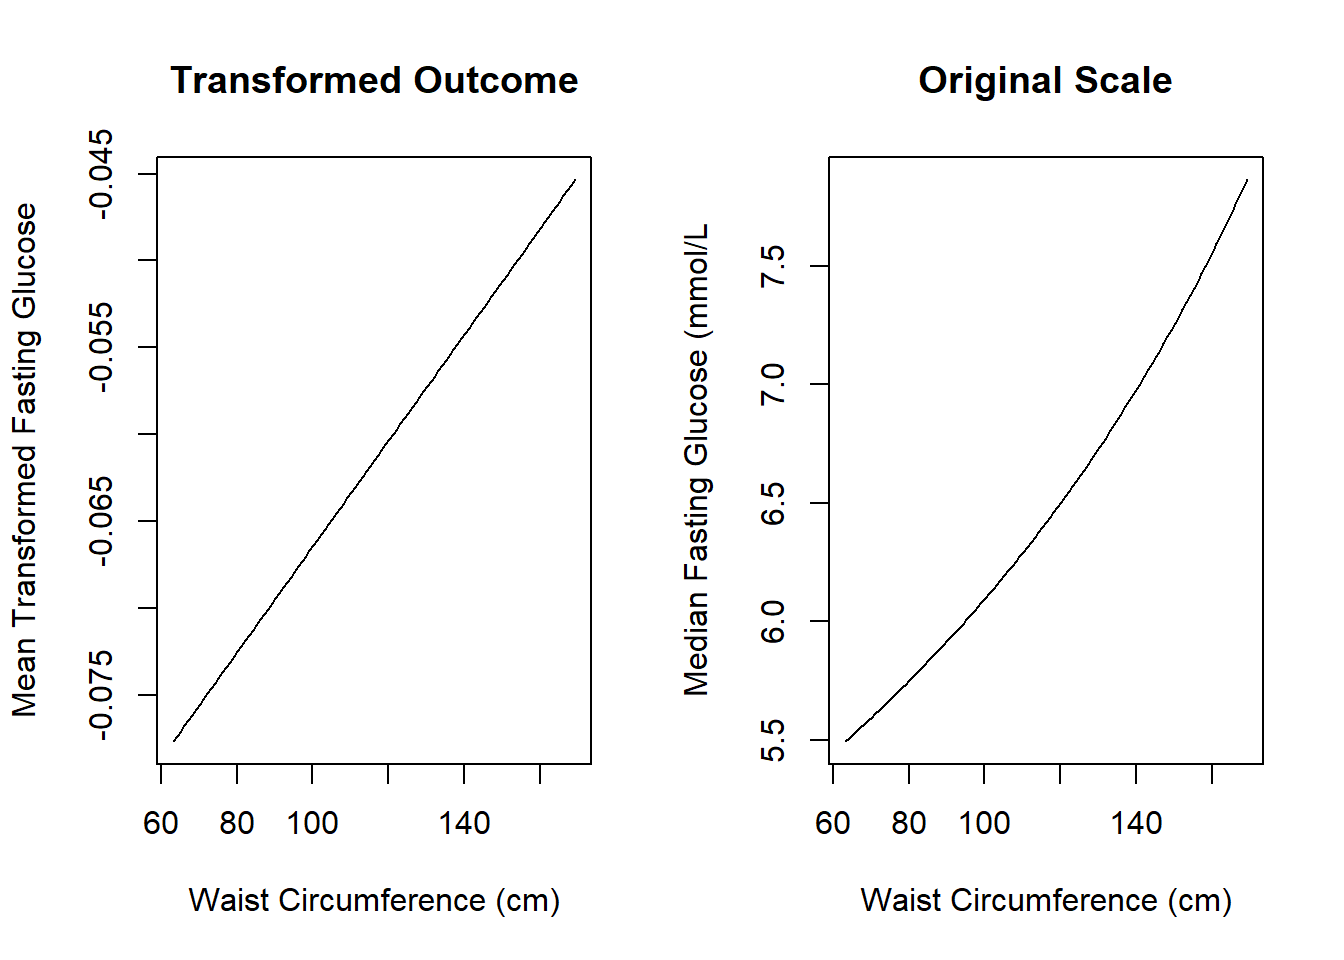 Interpreting a transformed outcome